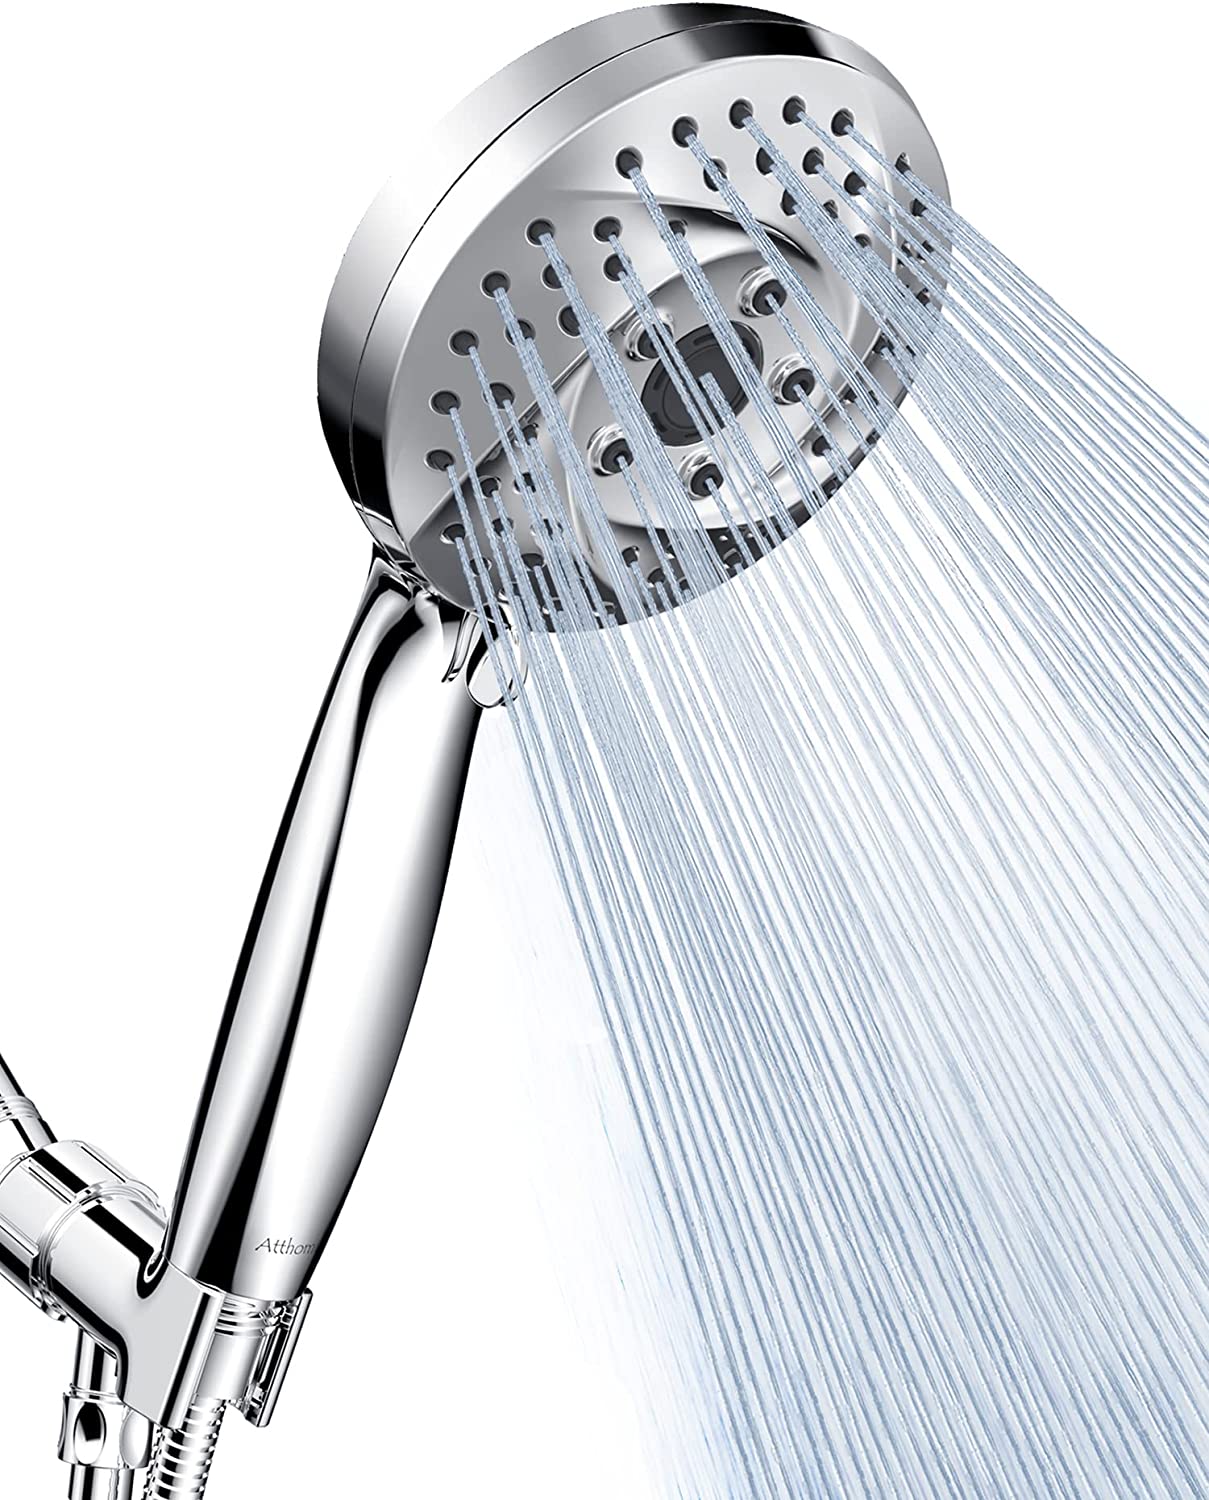 Shower Head with Handheld High Pressure - 6 Sprays [...]